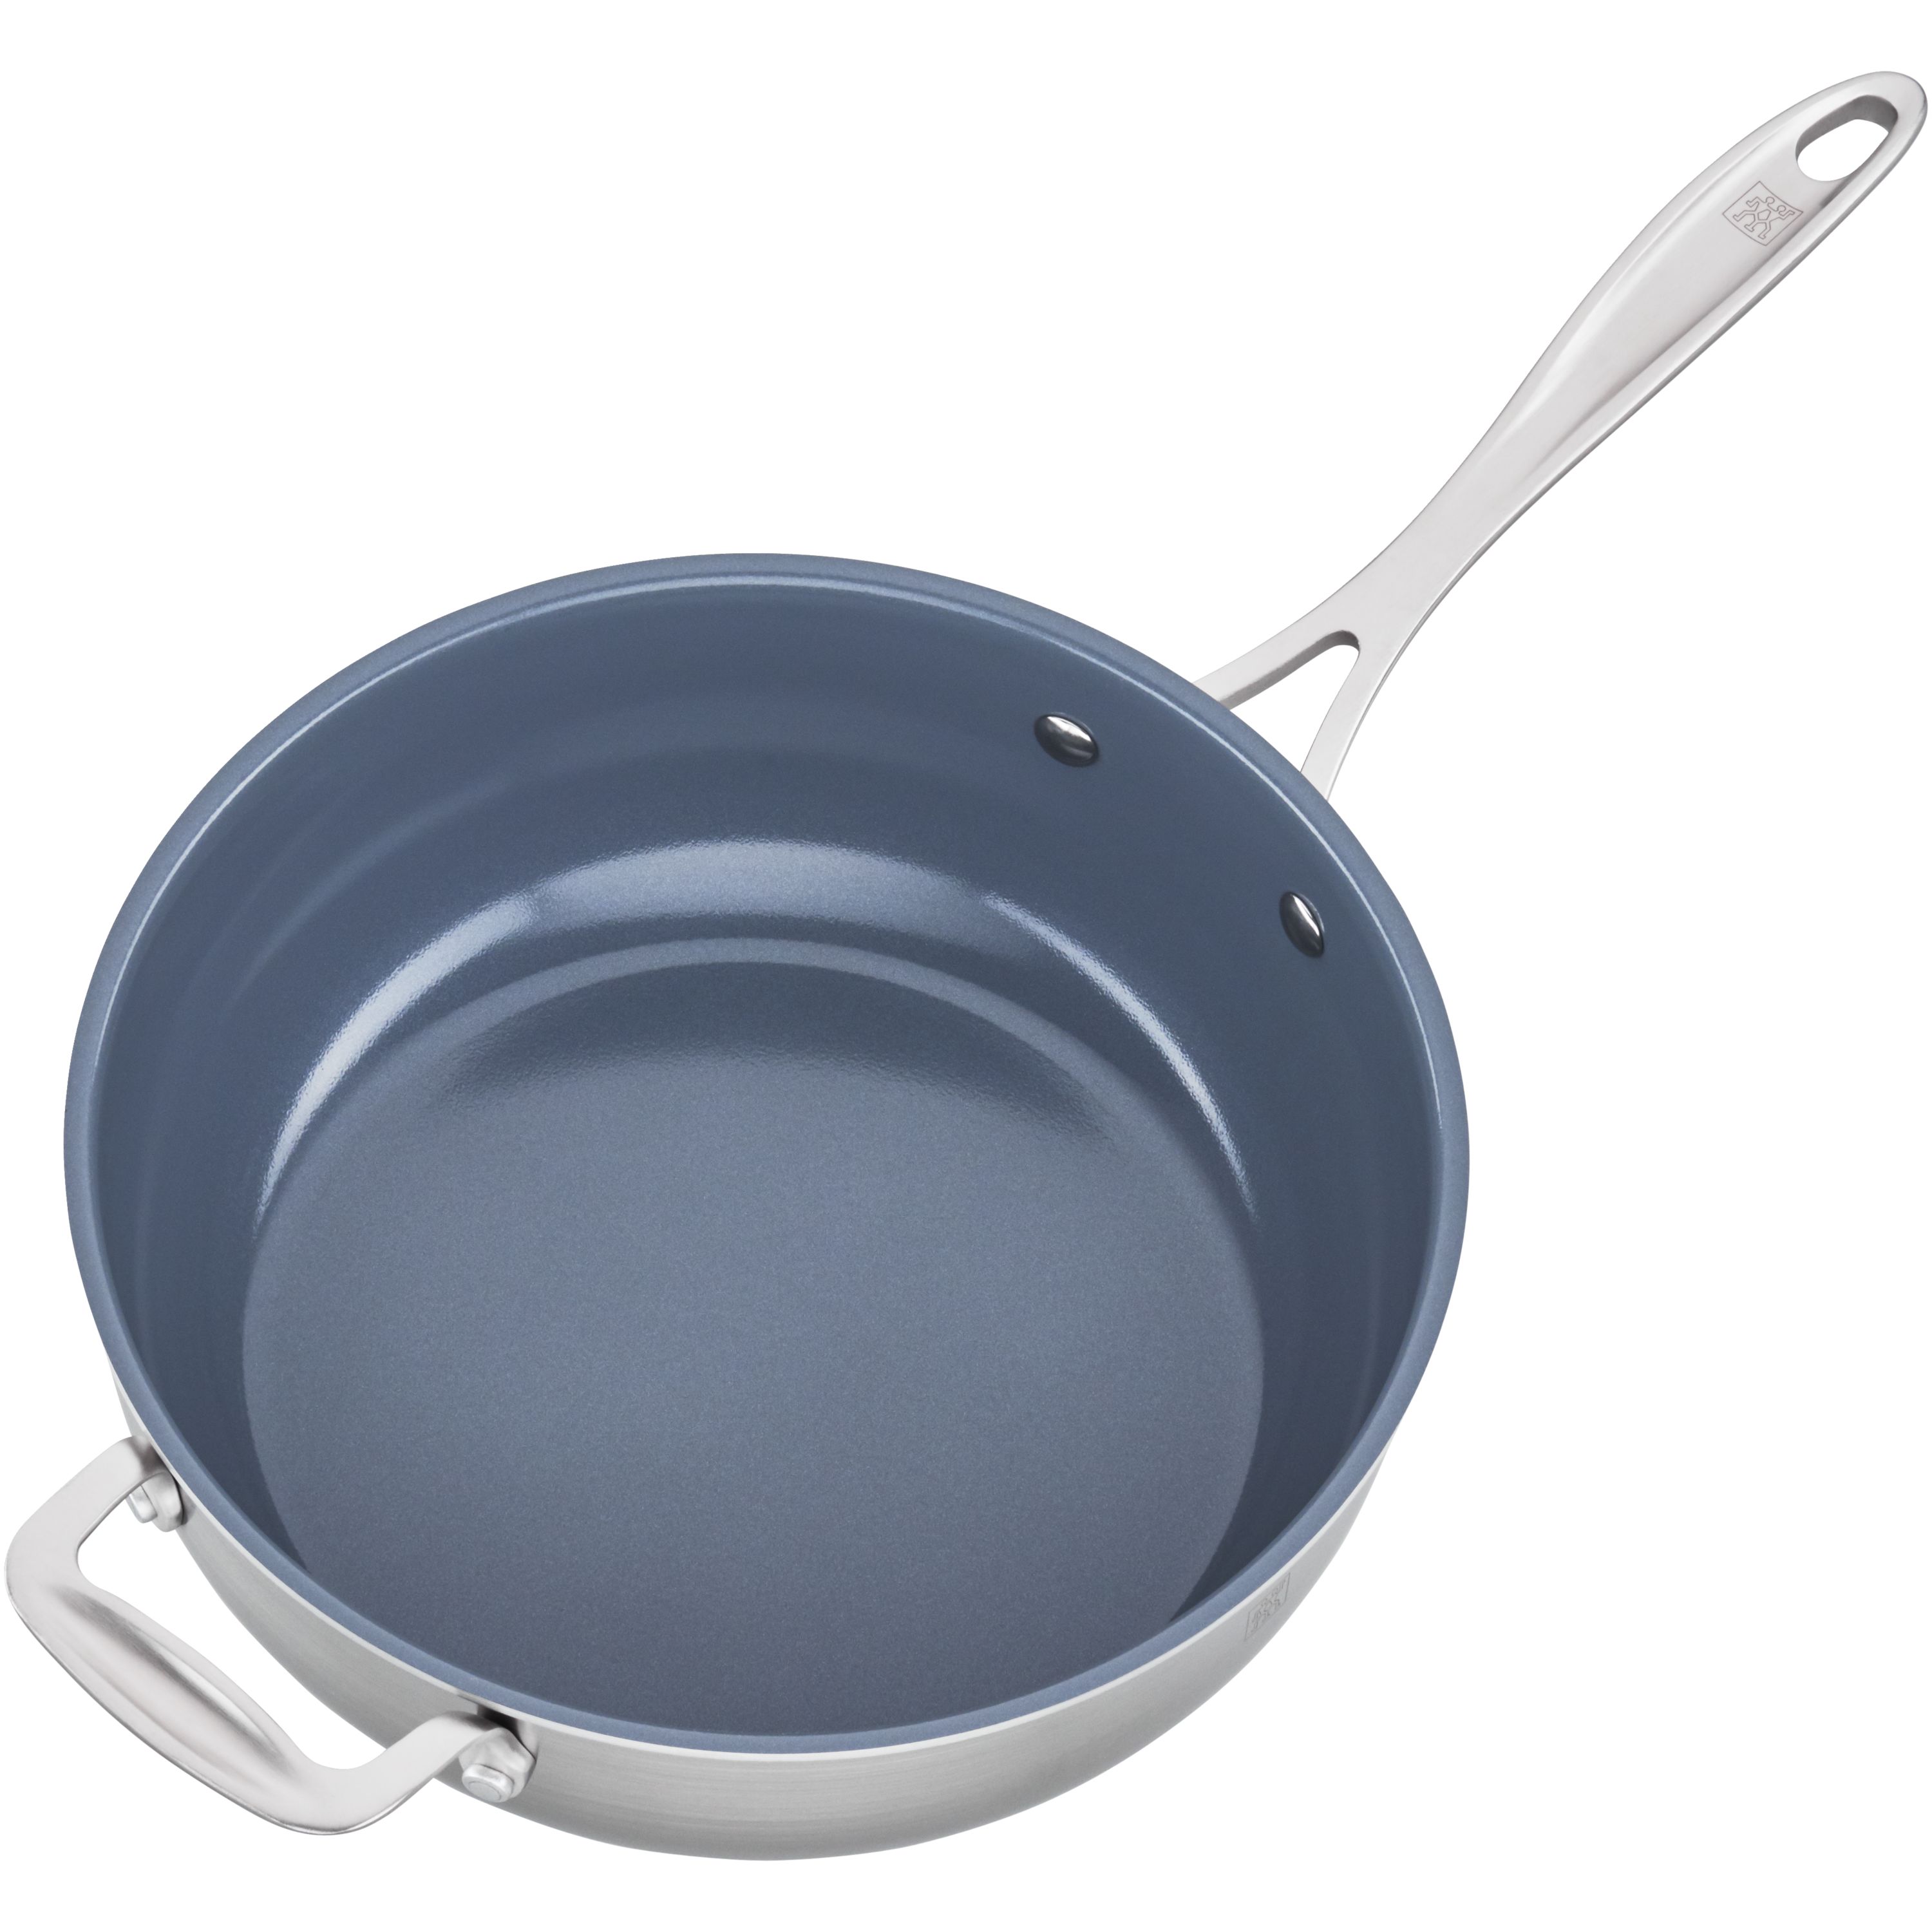 10 in. Ceramic Aluminum Nonstick Frying Pan in Blue with Lid, 1